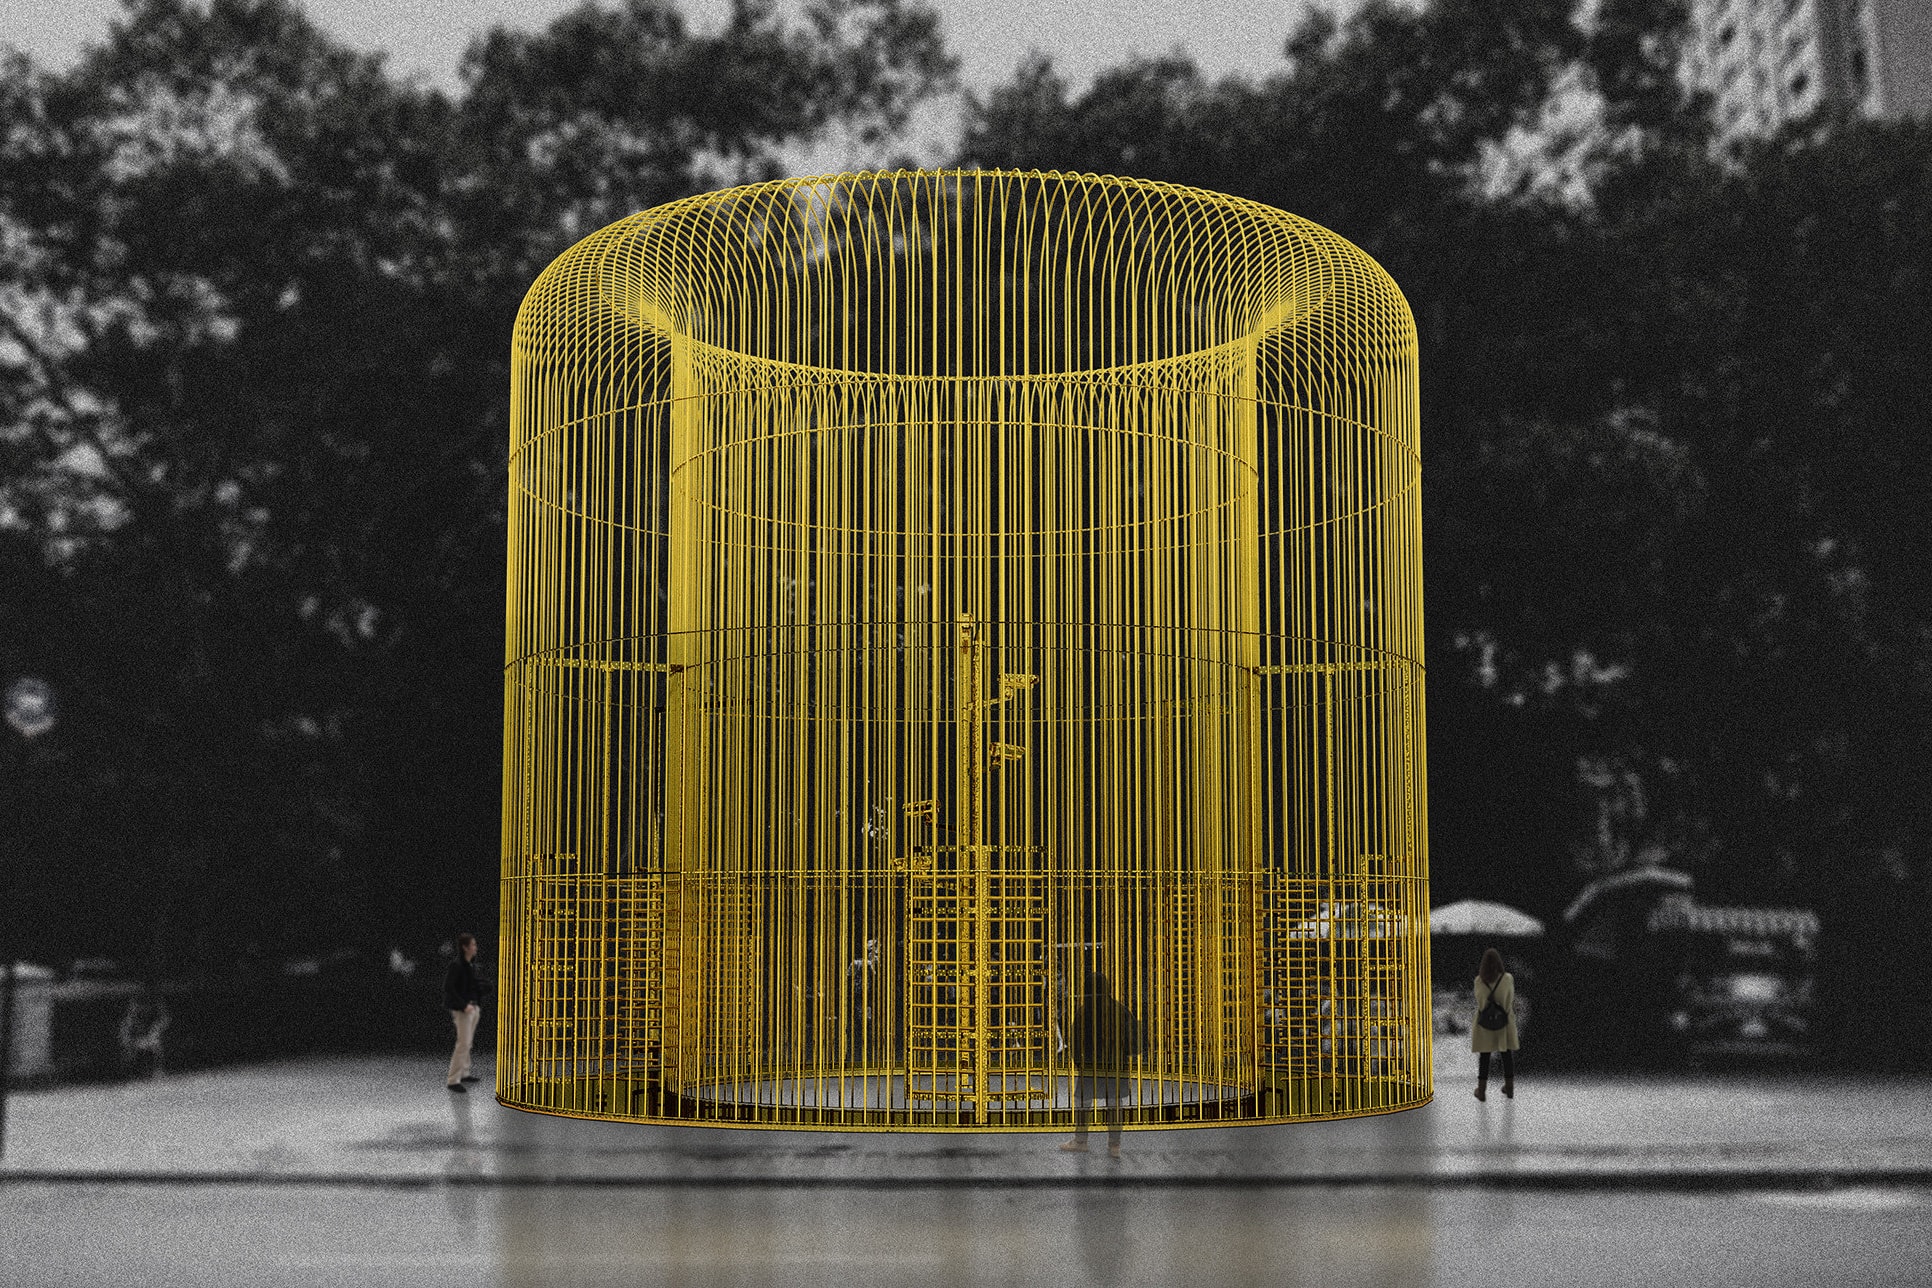 Ai Weiwei "Good Fences Make Good Neighbors" New York